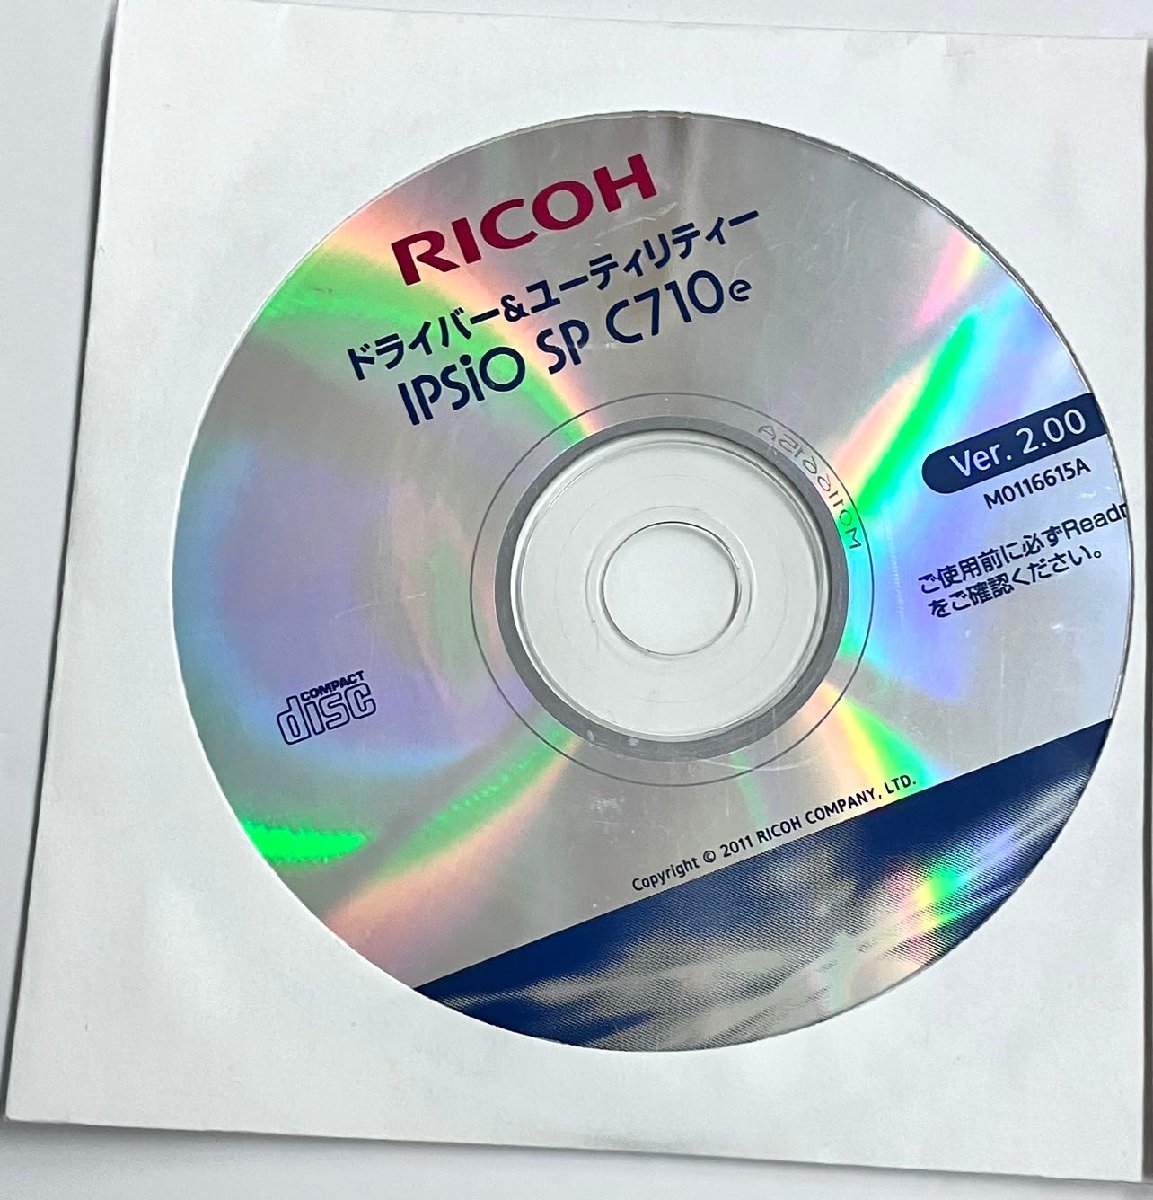 2YXS938 ★ Текущий предмет ★ Ricoh Ricoh Ipsio SP C710E драйвер и утилита принтера